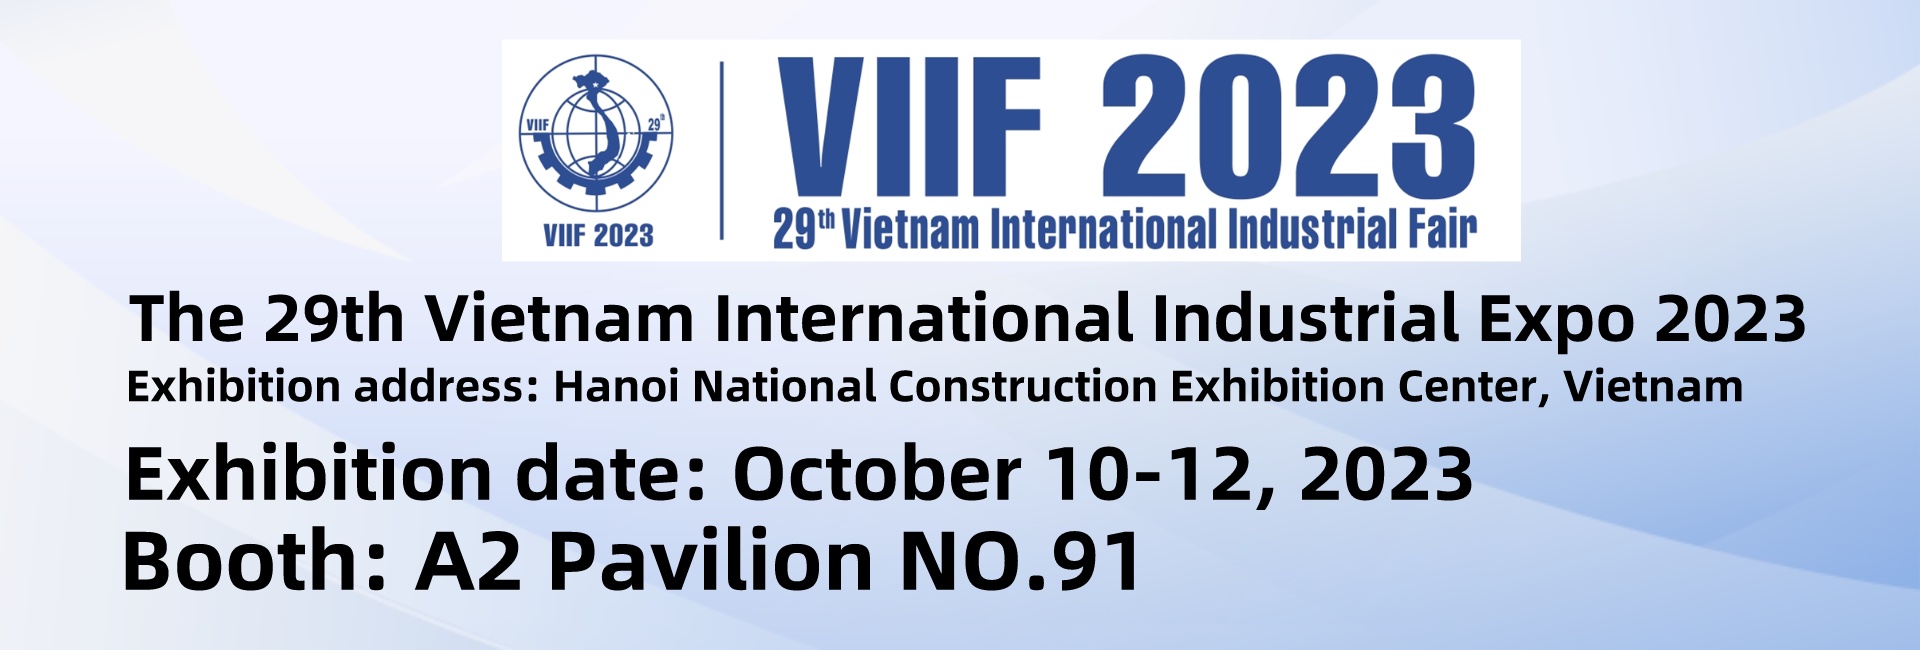 29th Vietnam International Industrial Expo 2023